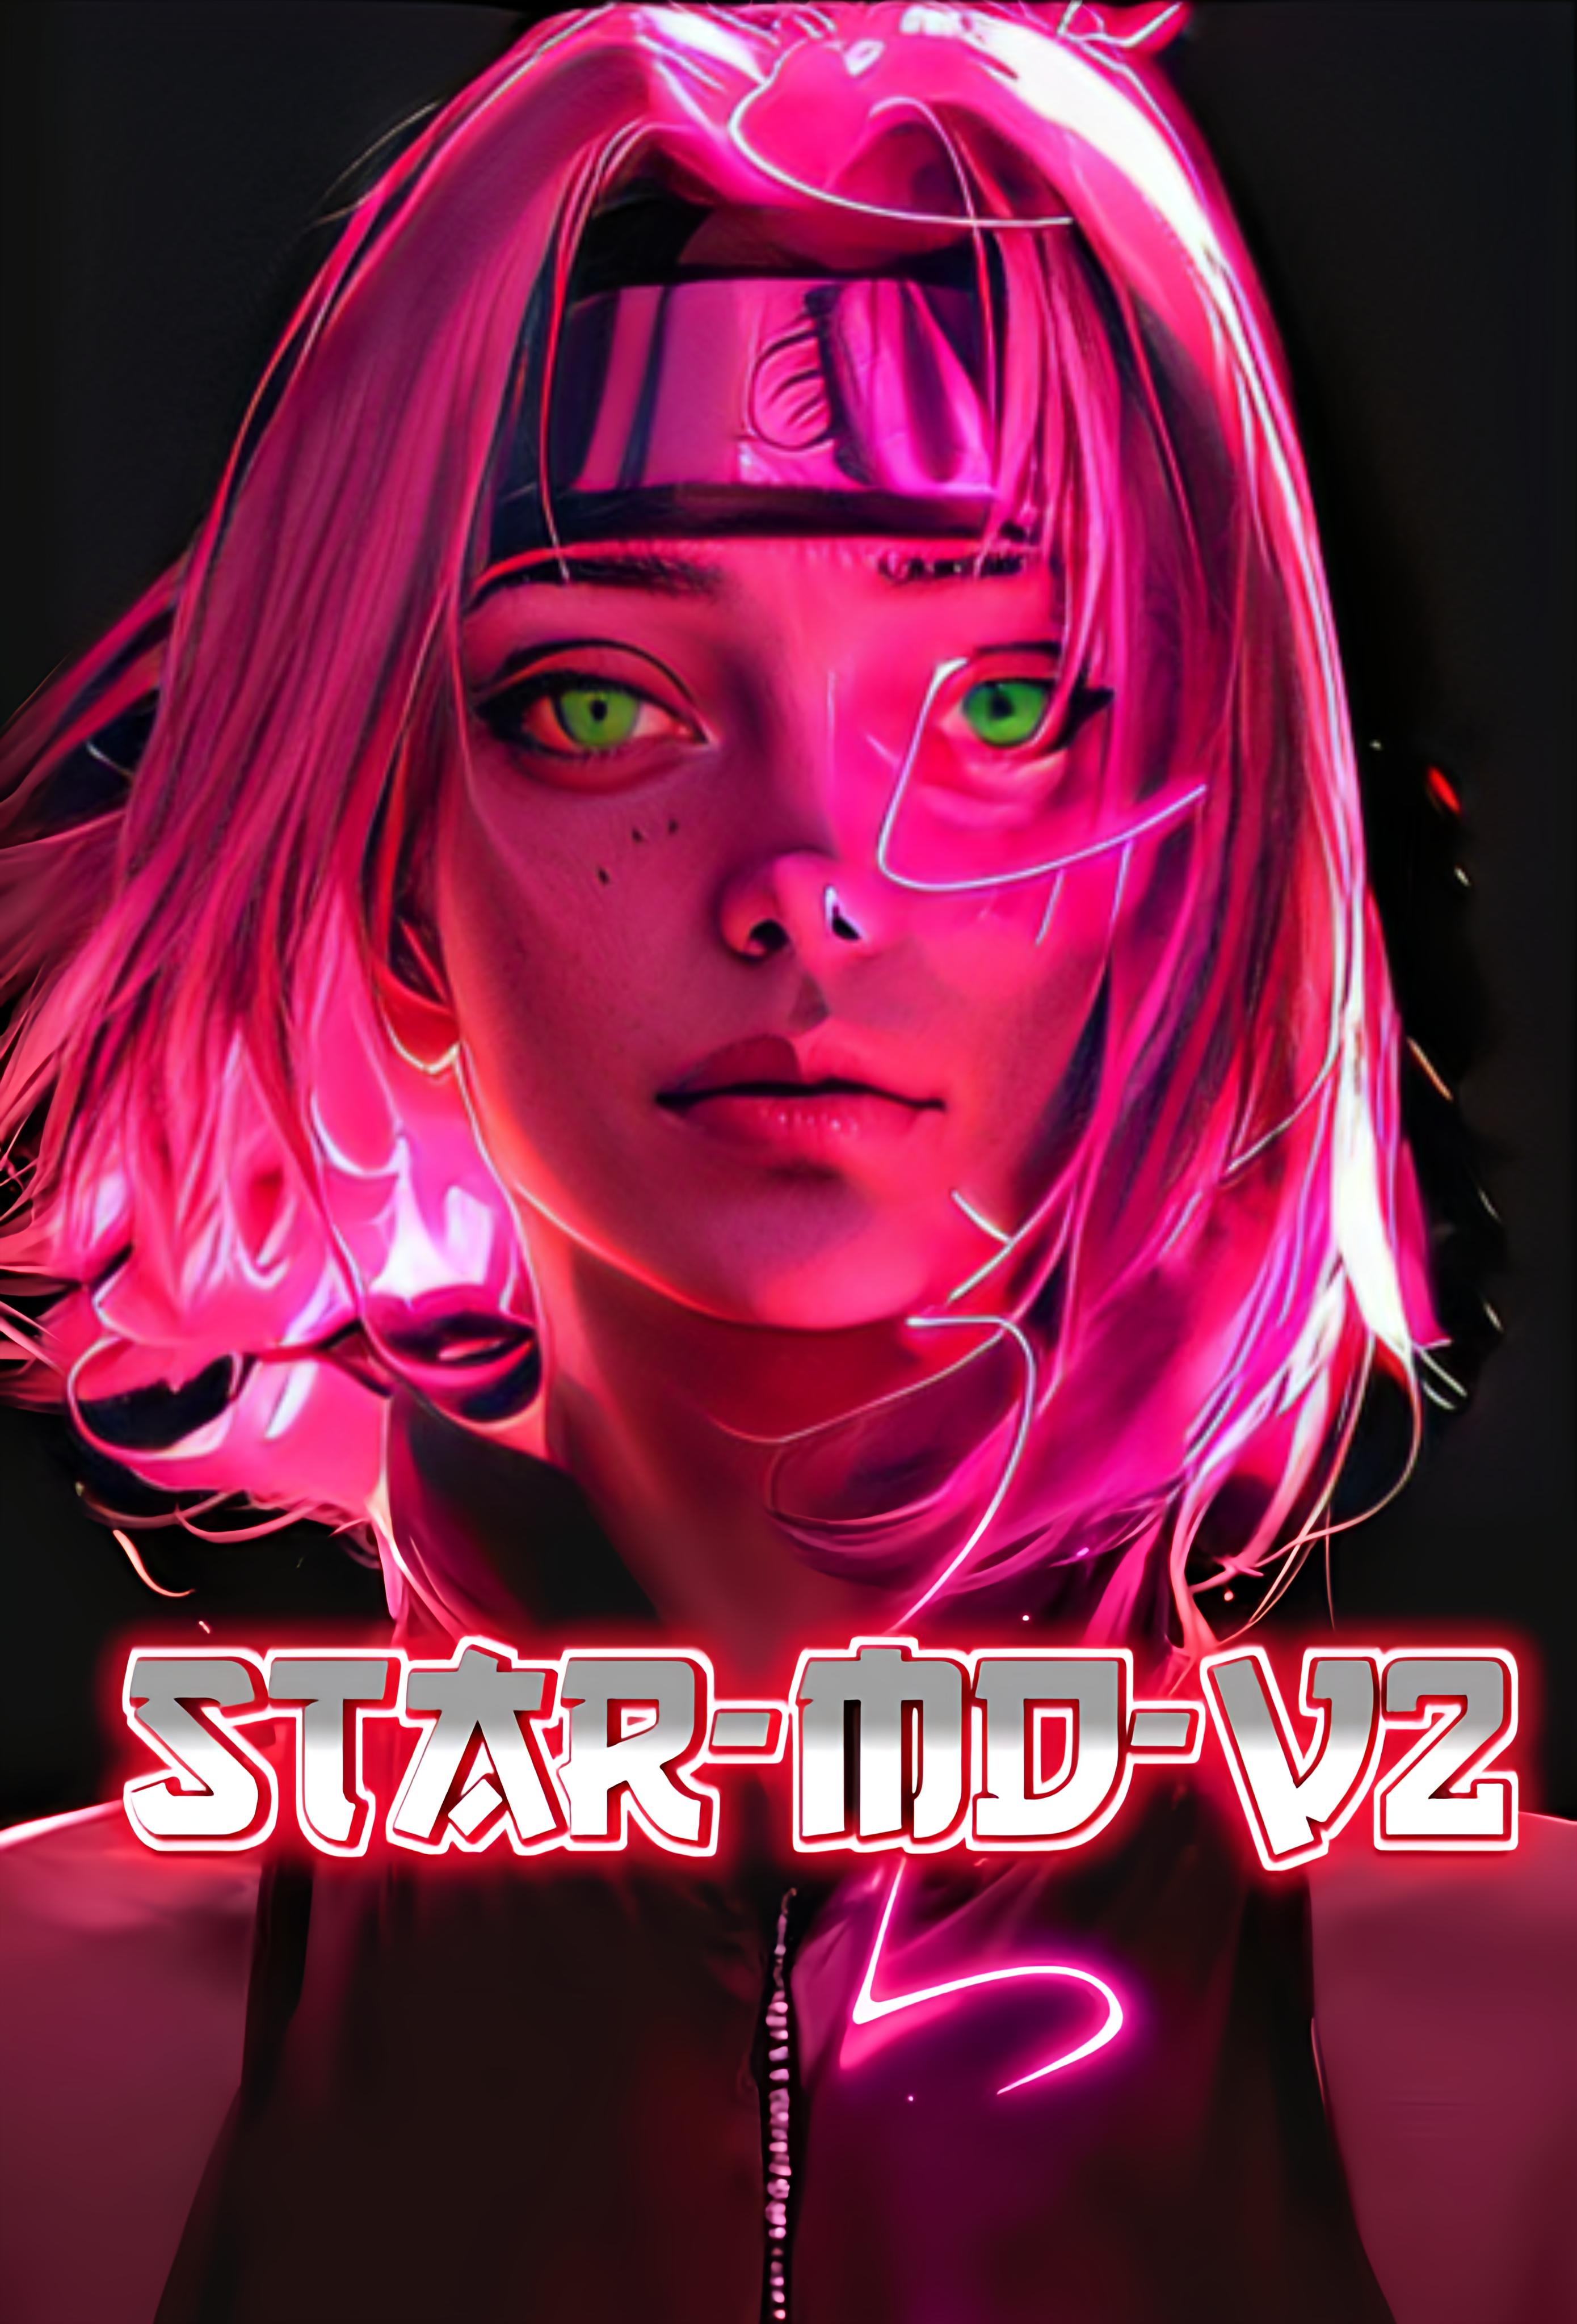 STAR-MD-V2